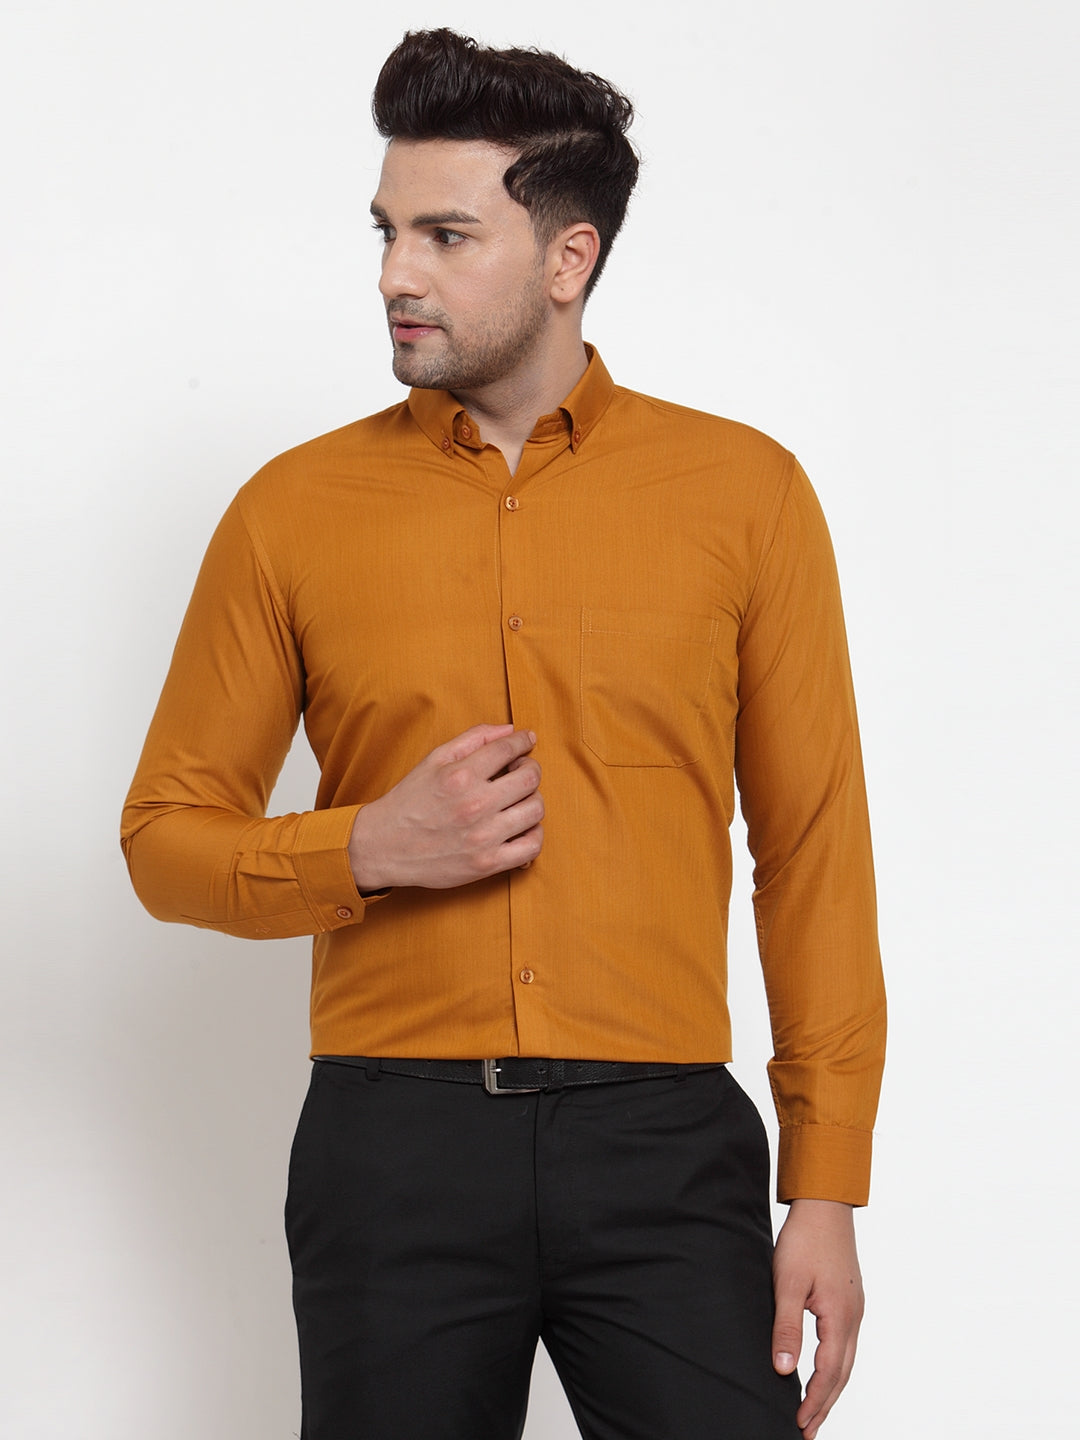 Men's Yellow Cotton Solid Button Down Formal Shirts ( SF 713Mustard ) - Jainish